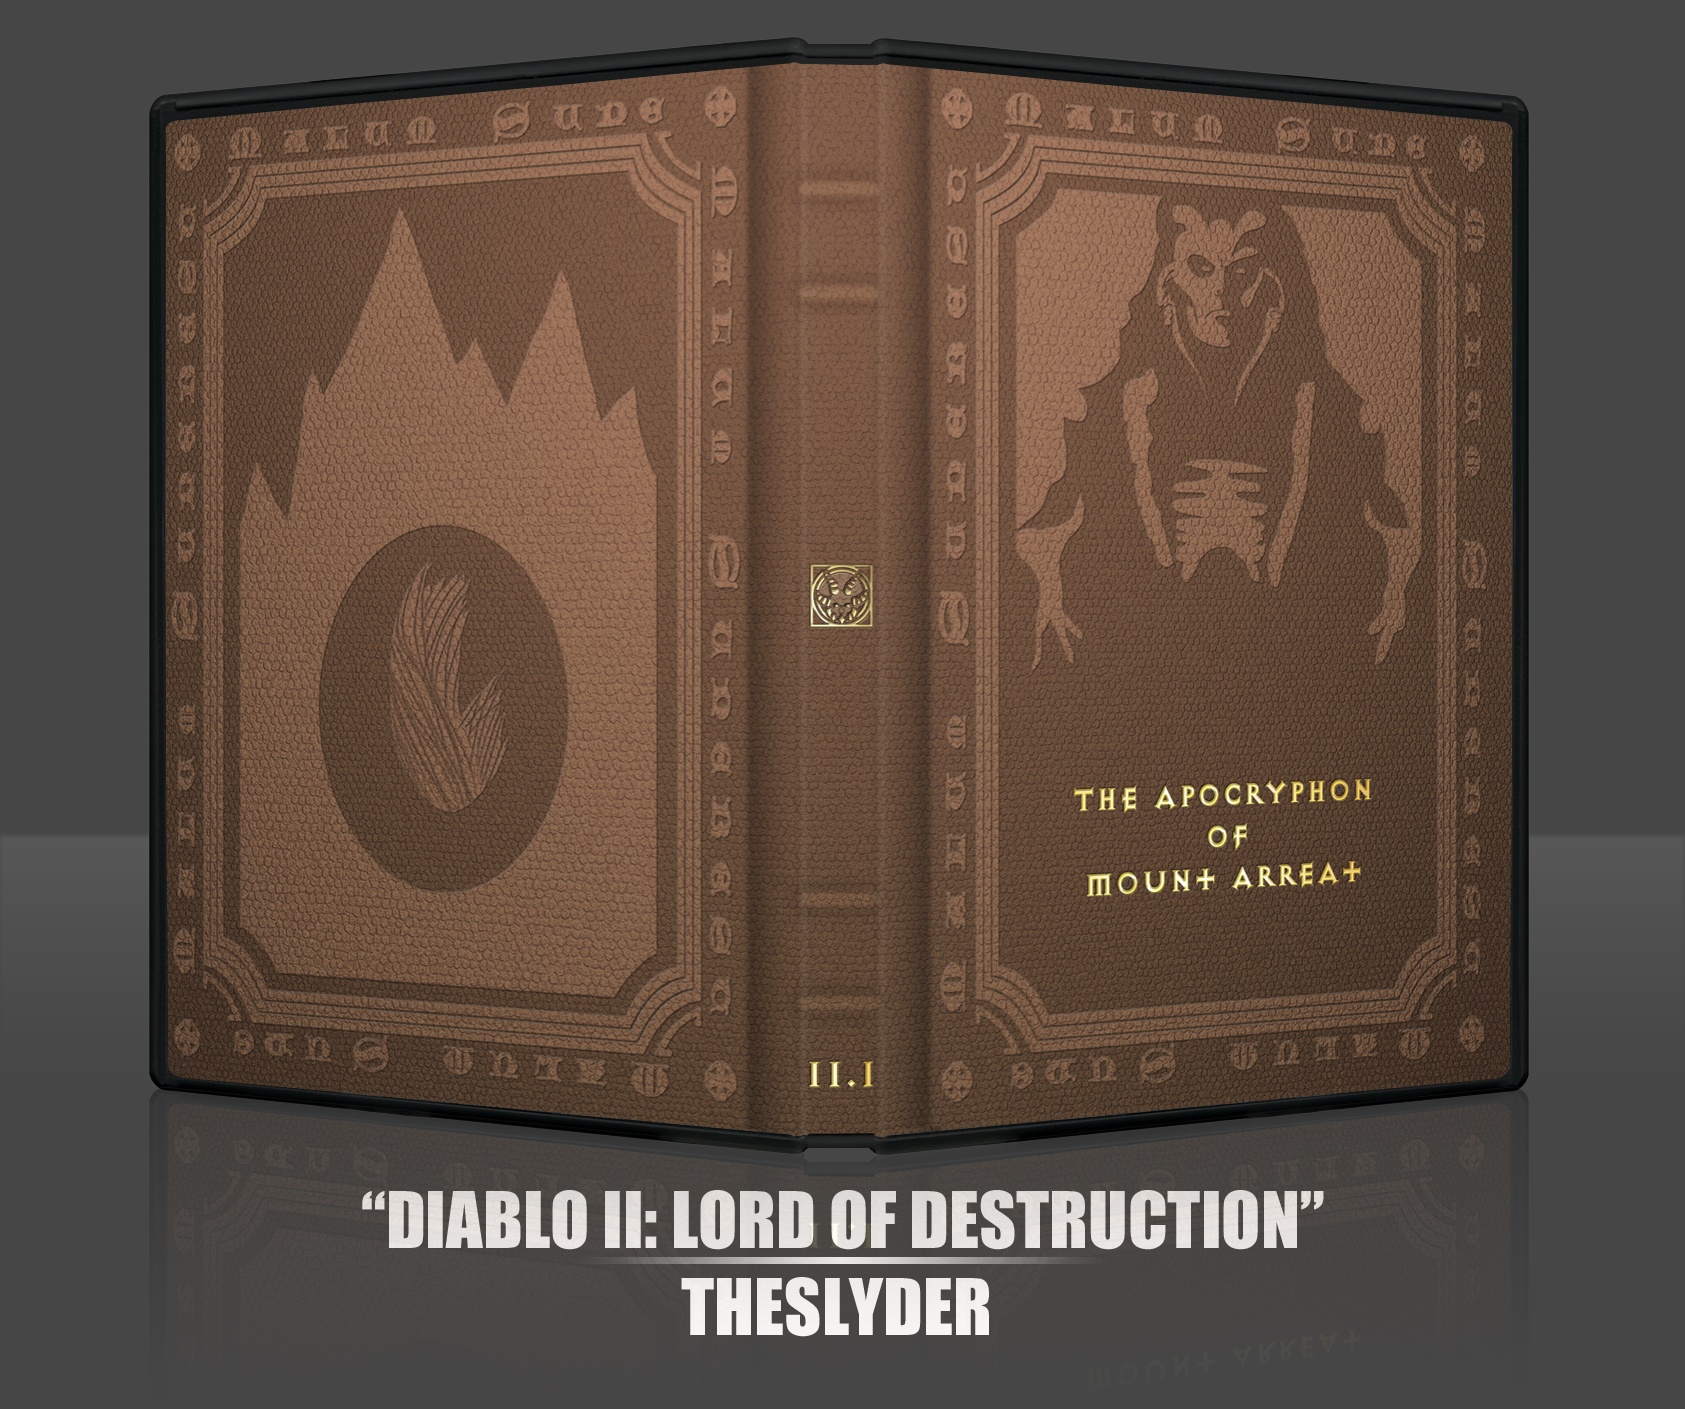 Diablo II: Lord of Destruction box cover